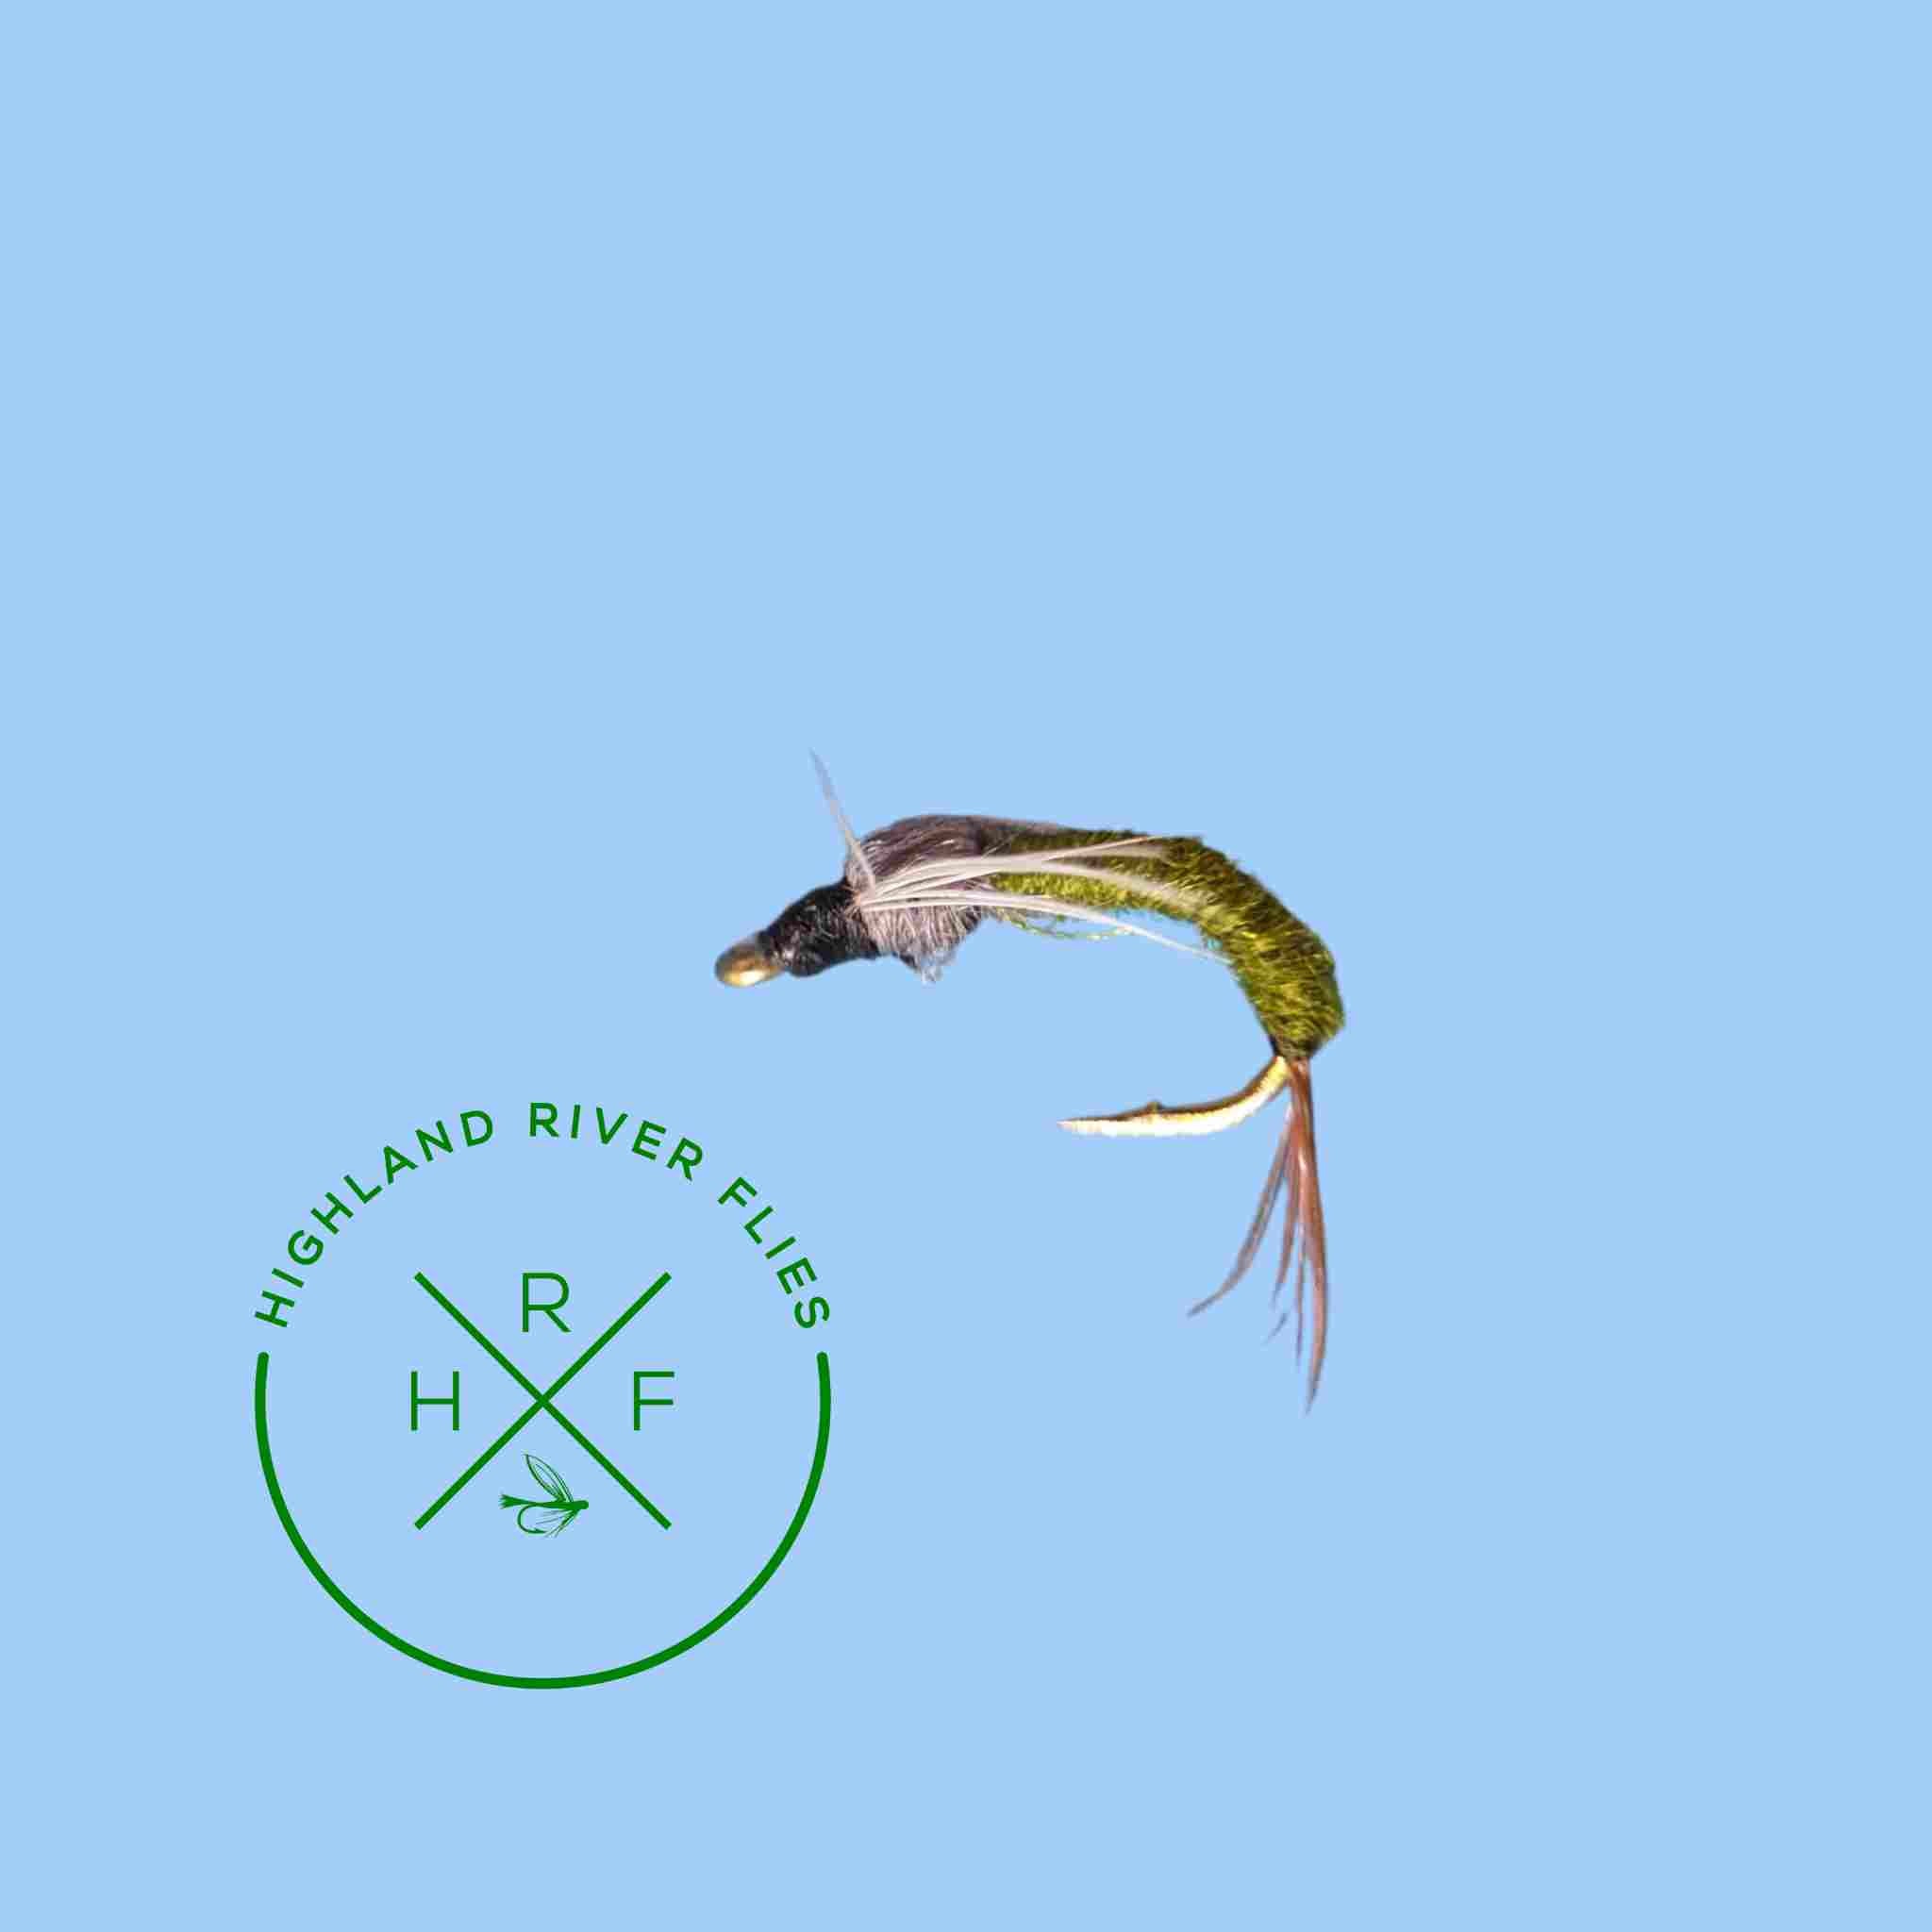 Blue Wing Olive Emerger – Highland River Flies